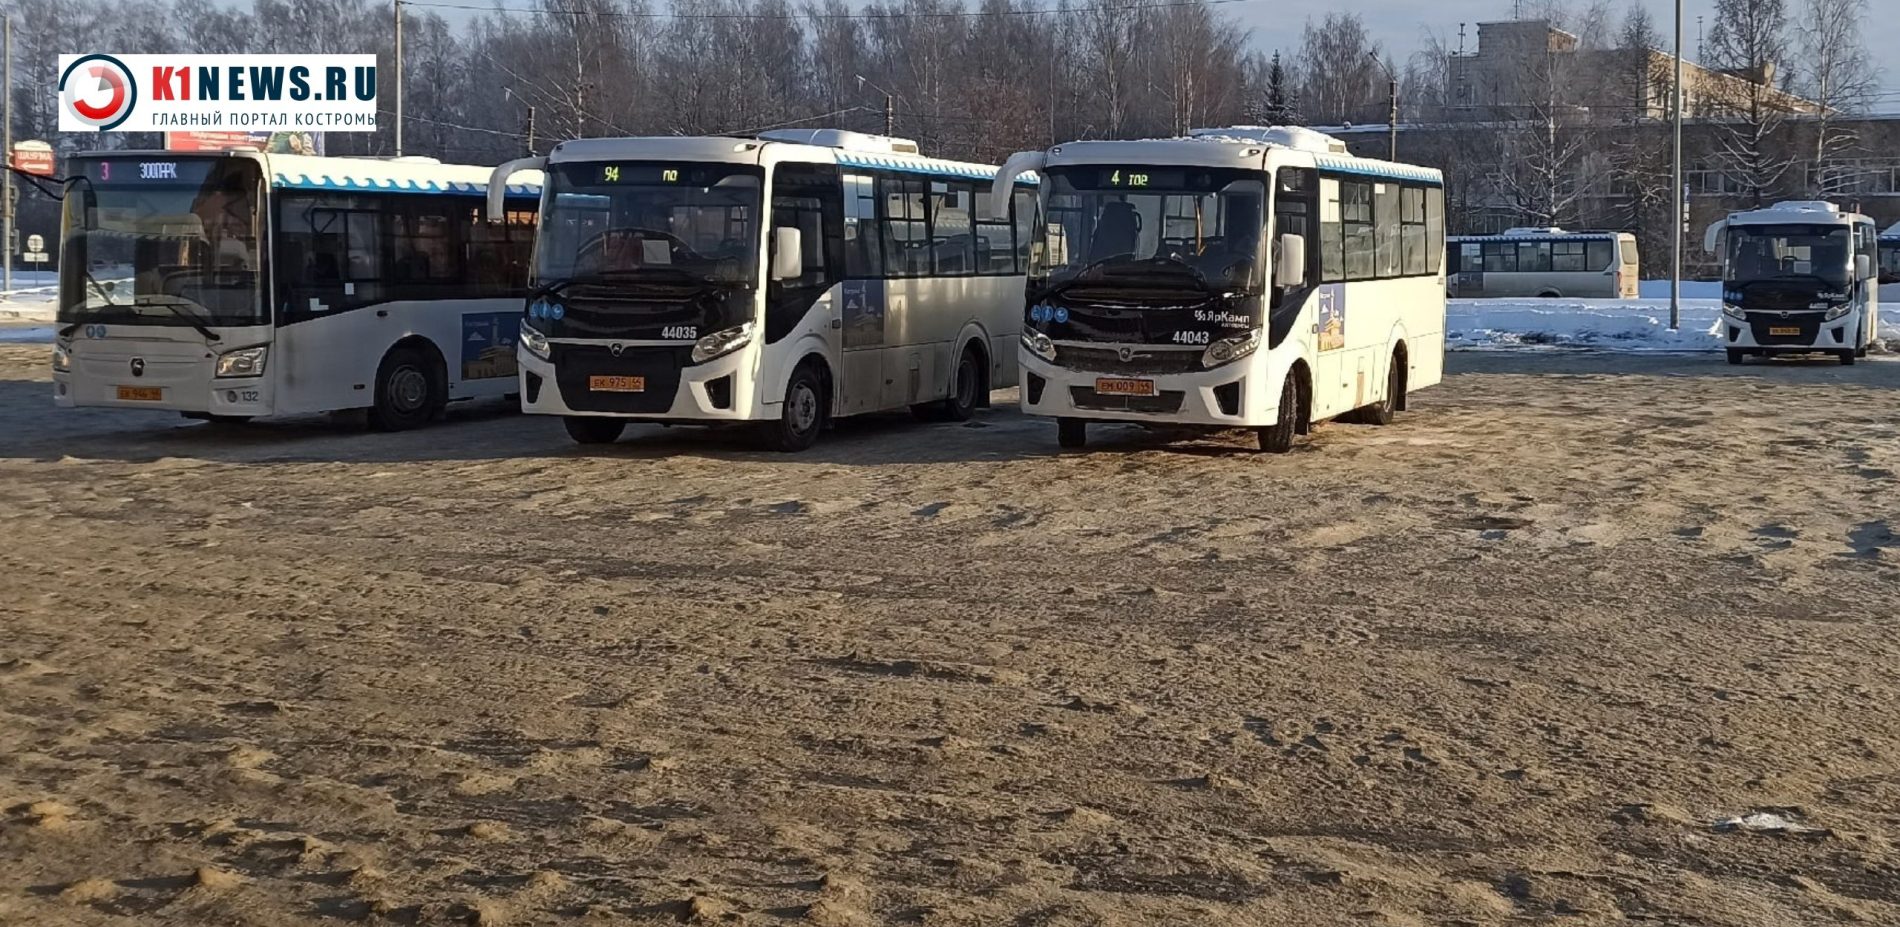 Водители автобусов в Костроме попались на нарушениях